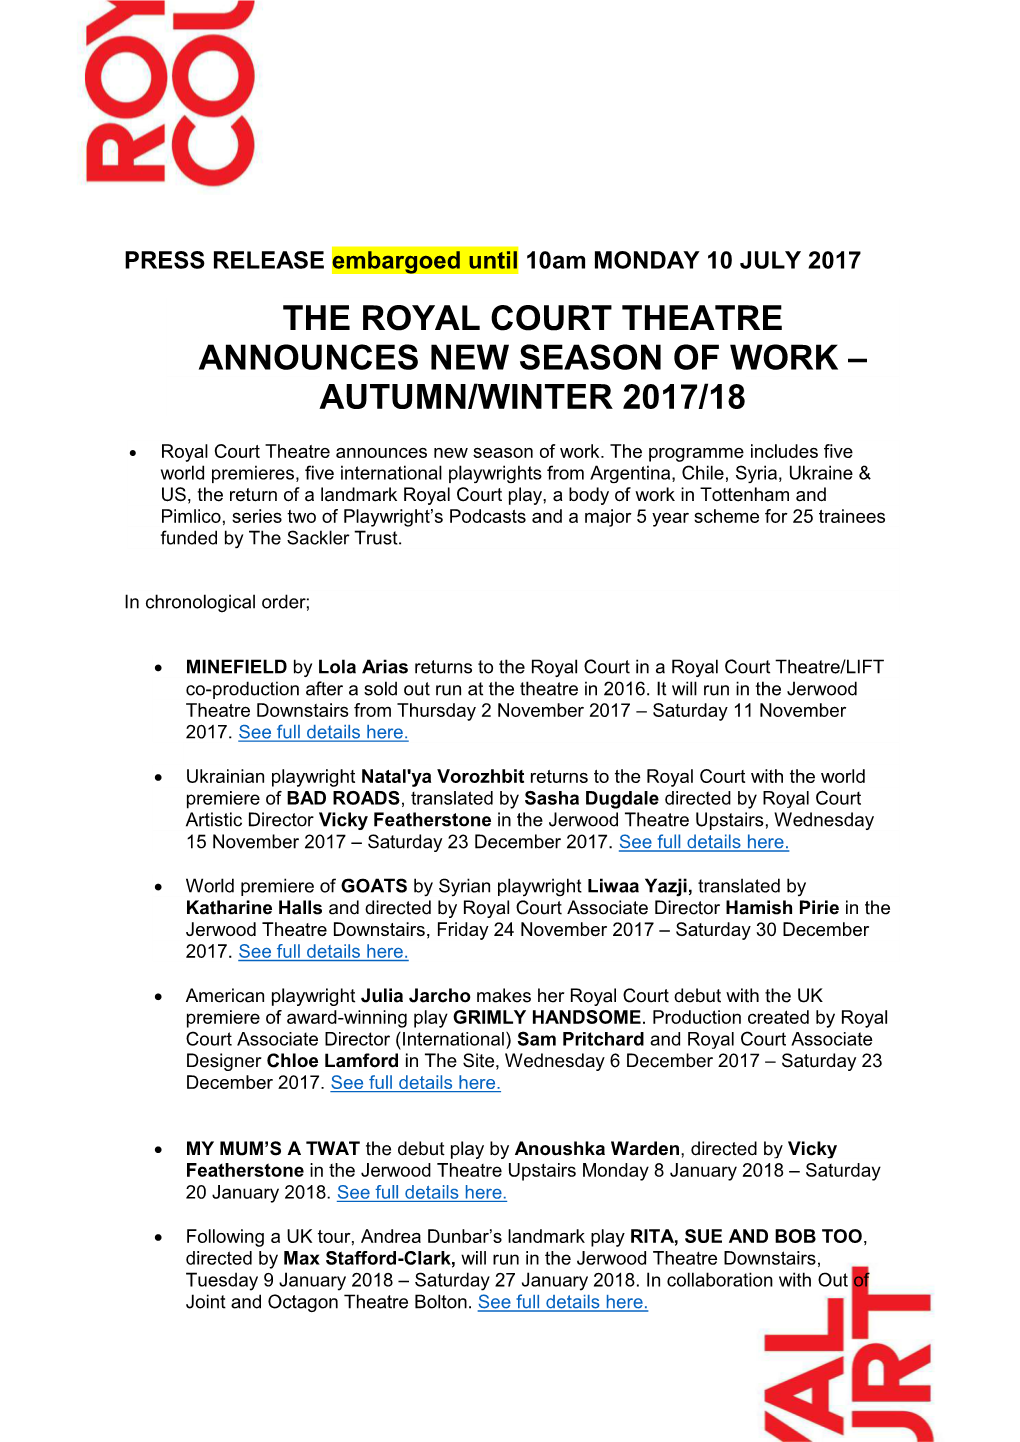 The Royal Court Theatre Announces New Season of Work – Autumn/Winter 2017/18